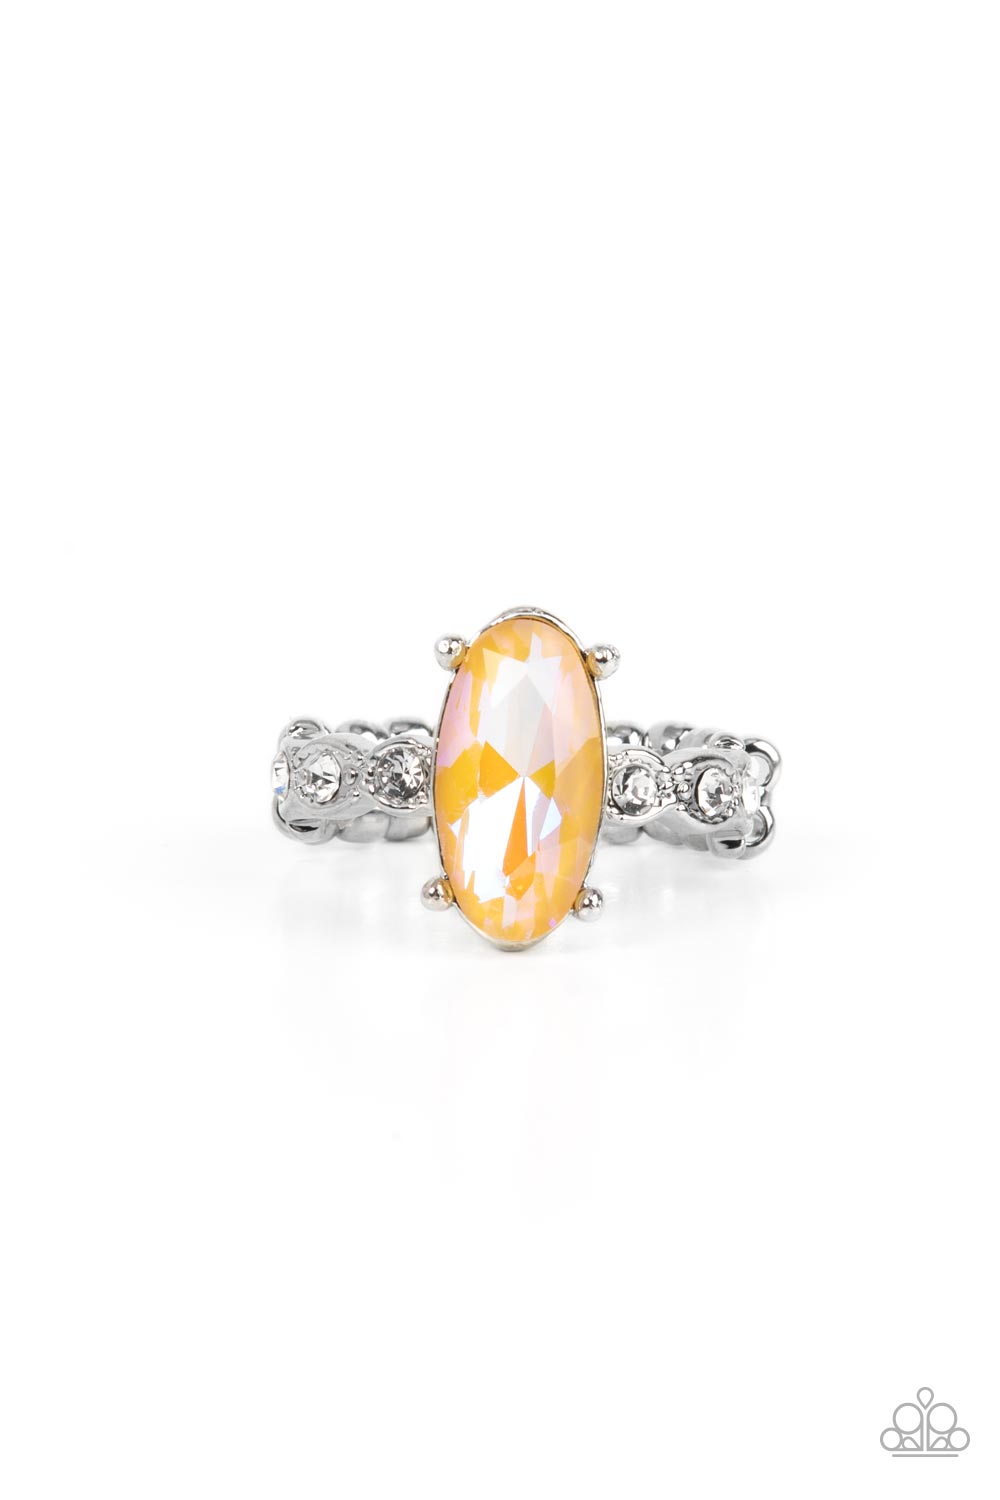 Stellar Sensation Yellow UV Shimmer Rhinestone Ring - Paparazzi Accessories- lightbox - CarasShop.com - $5 Jewelry by Cara Jewels